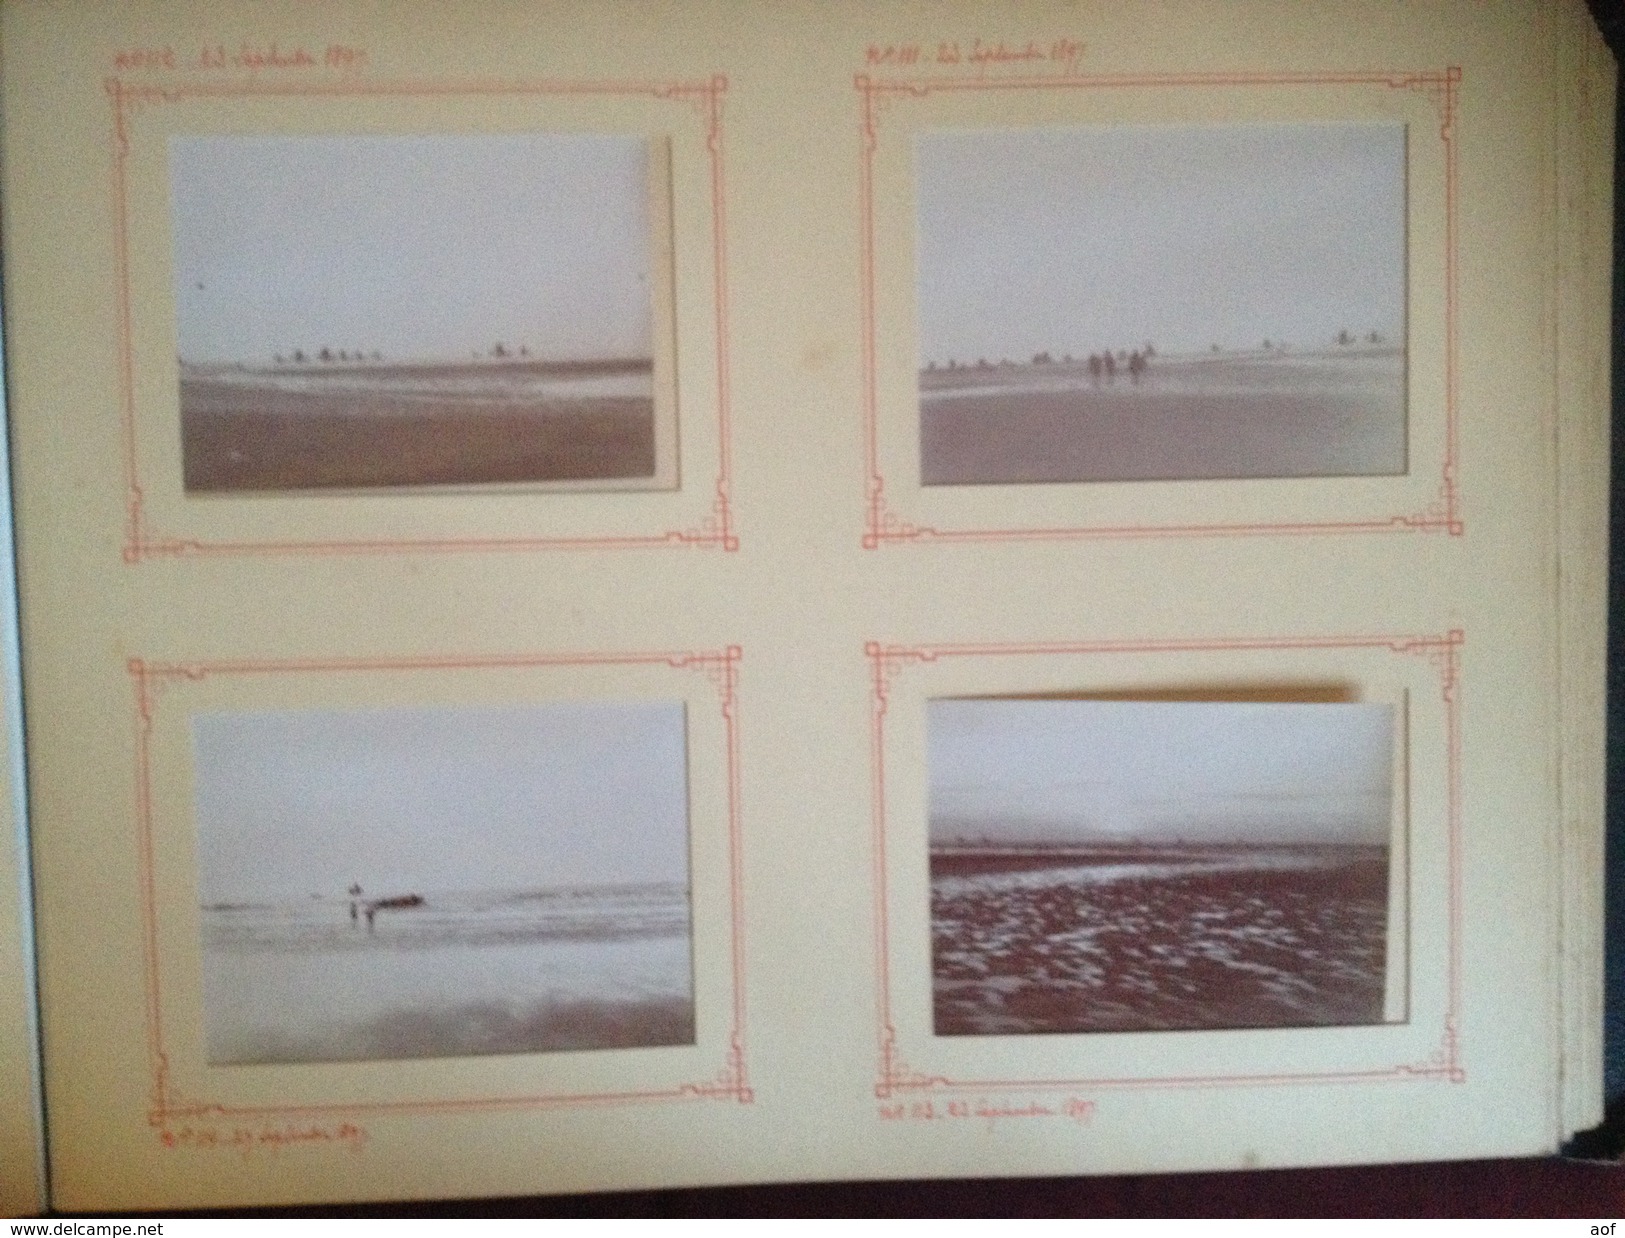 Album de famille - 184 photos de 1897